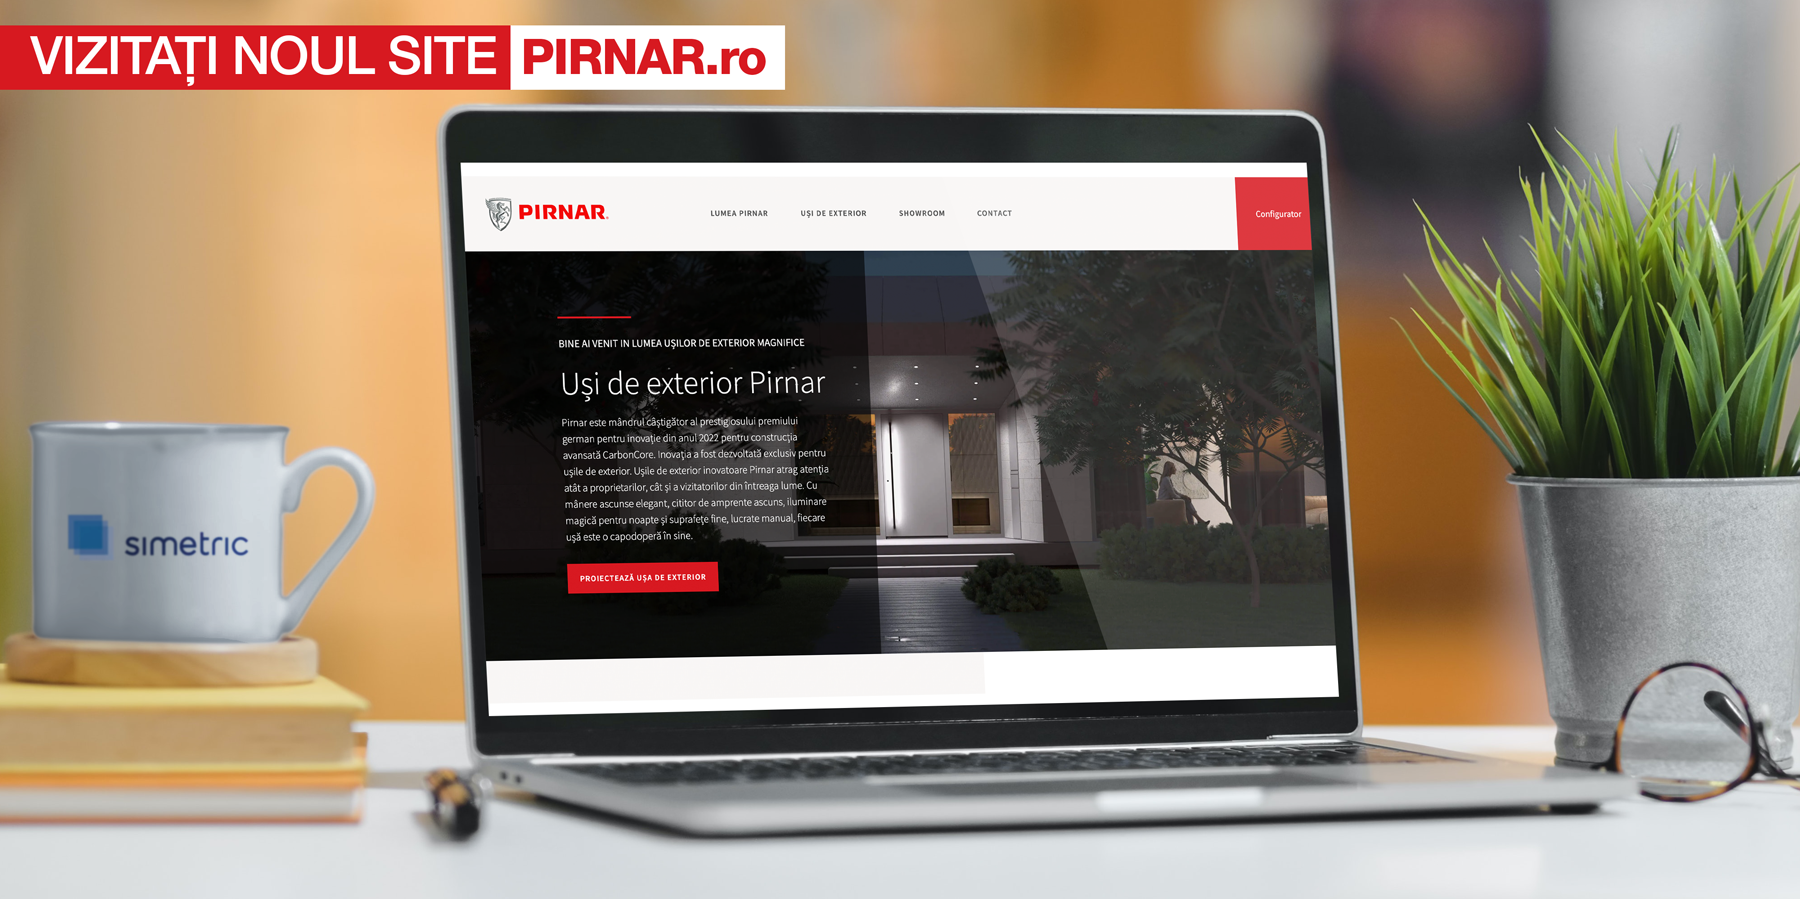 Vizitati noul site pirnar.ro